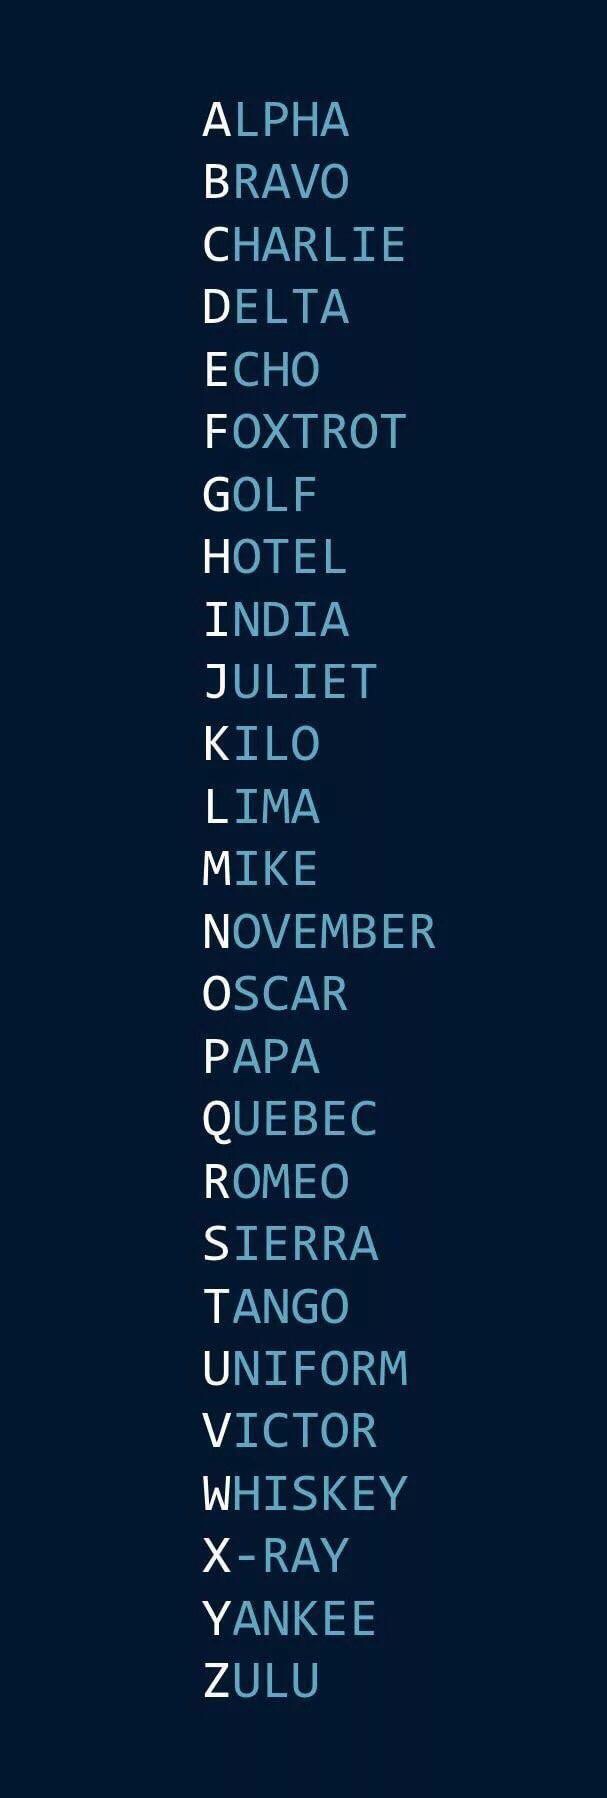 list of the NATO phonetic alphabet